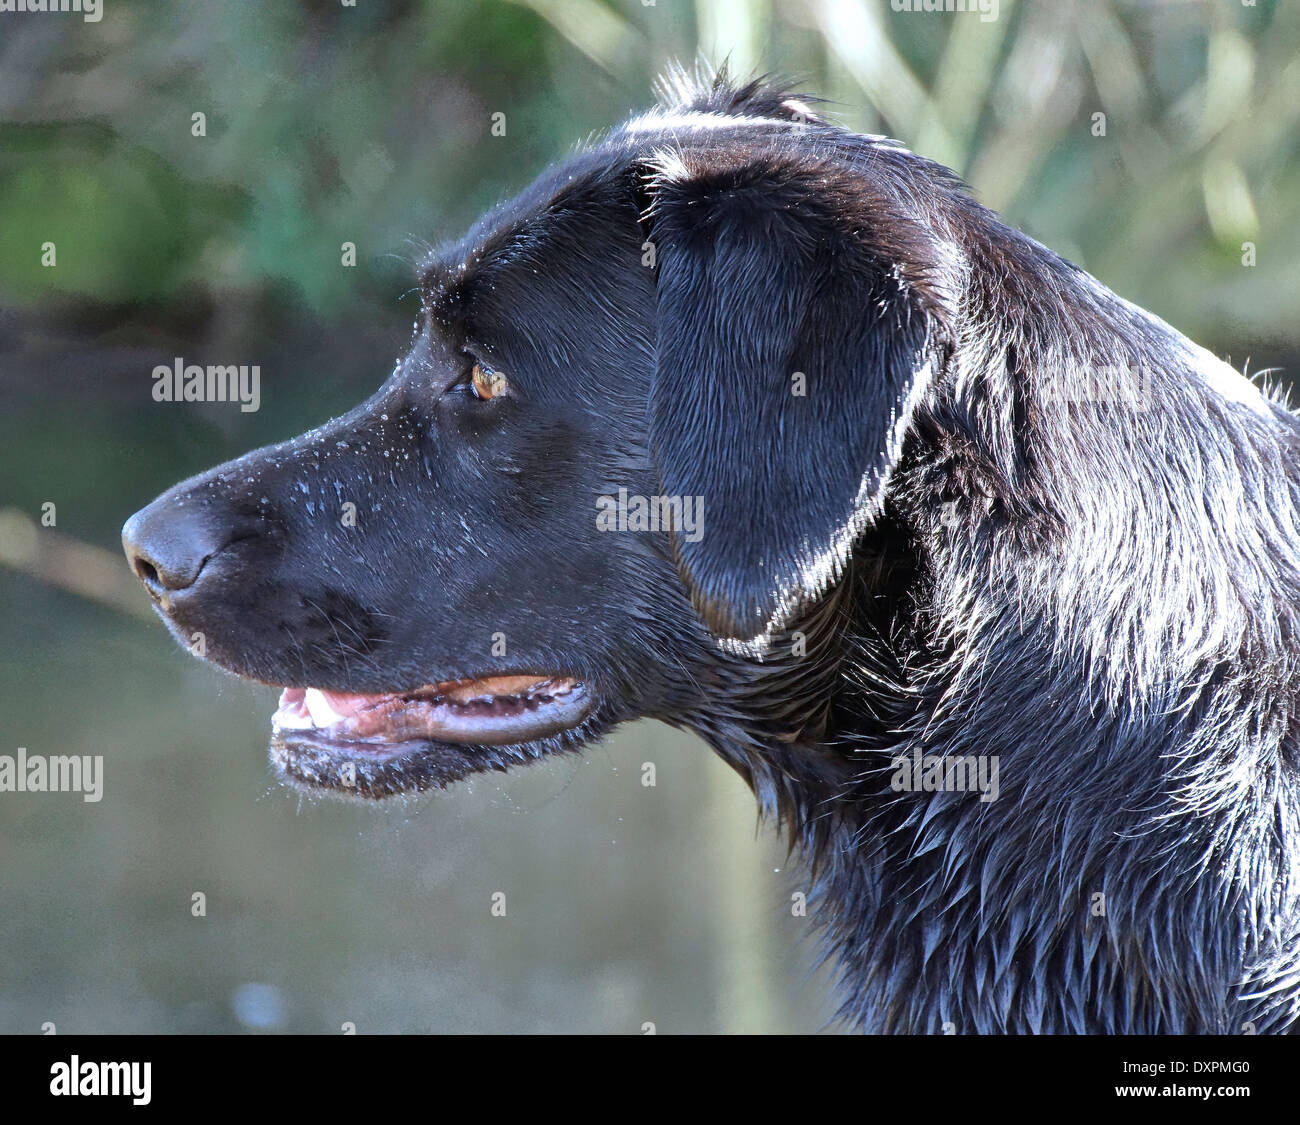 Profile photograph of a Black Labrador by a pond Stock Photo